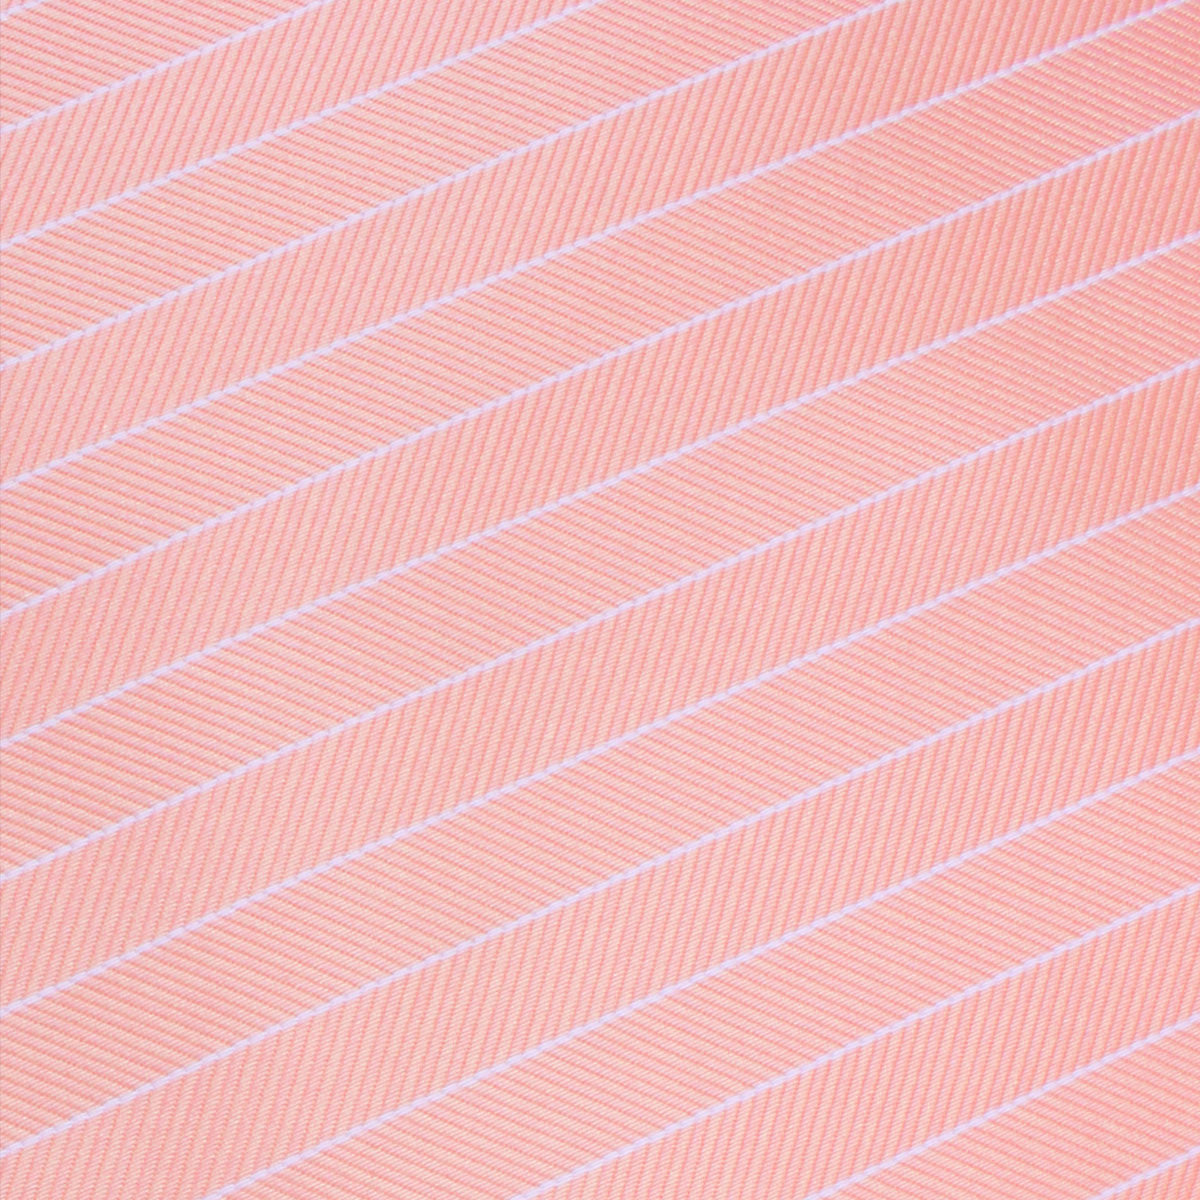 Blush Pink Herringbone Pinstripe Necktie Fabric